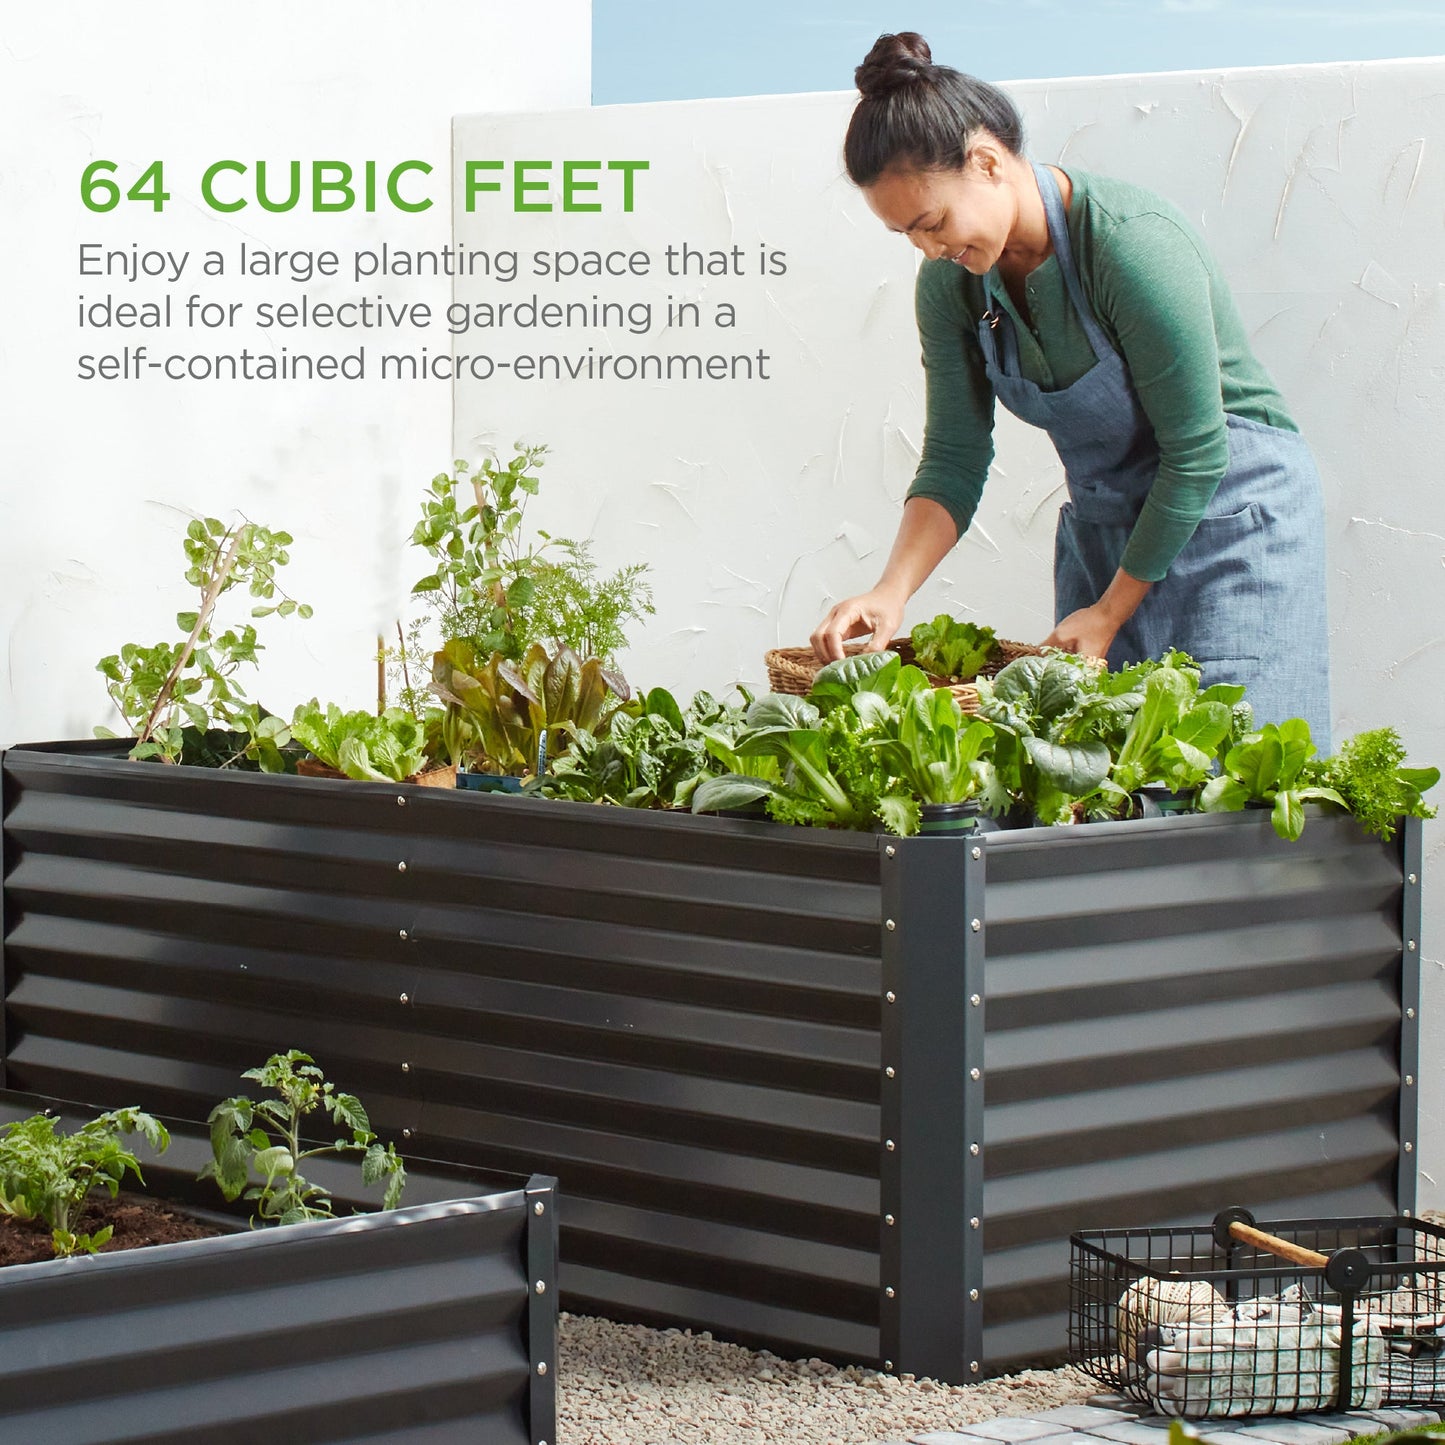 Outdoor Metal Raised Garden Bed for Vegetables, Flowers, Herbs - 8x4x2ft